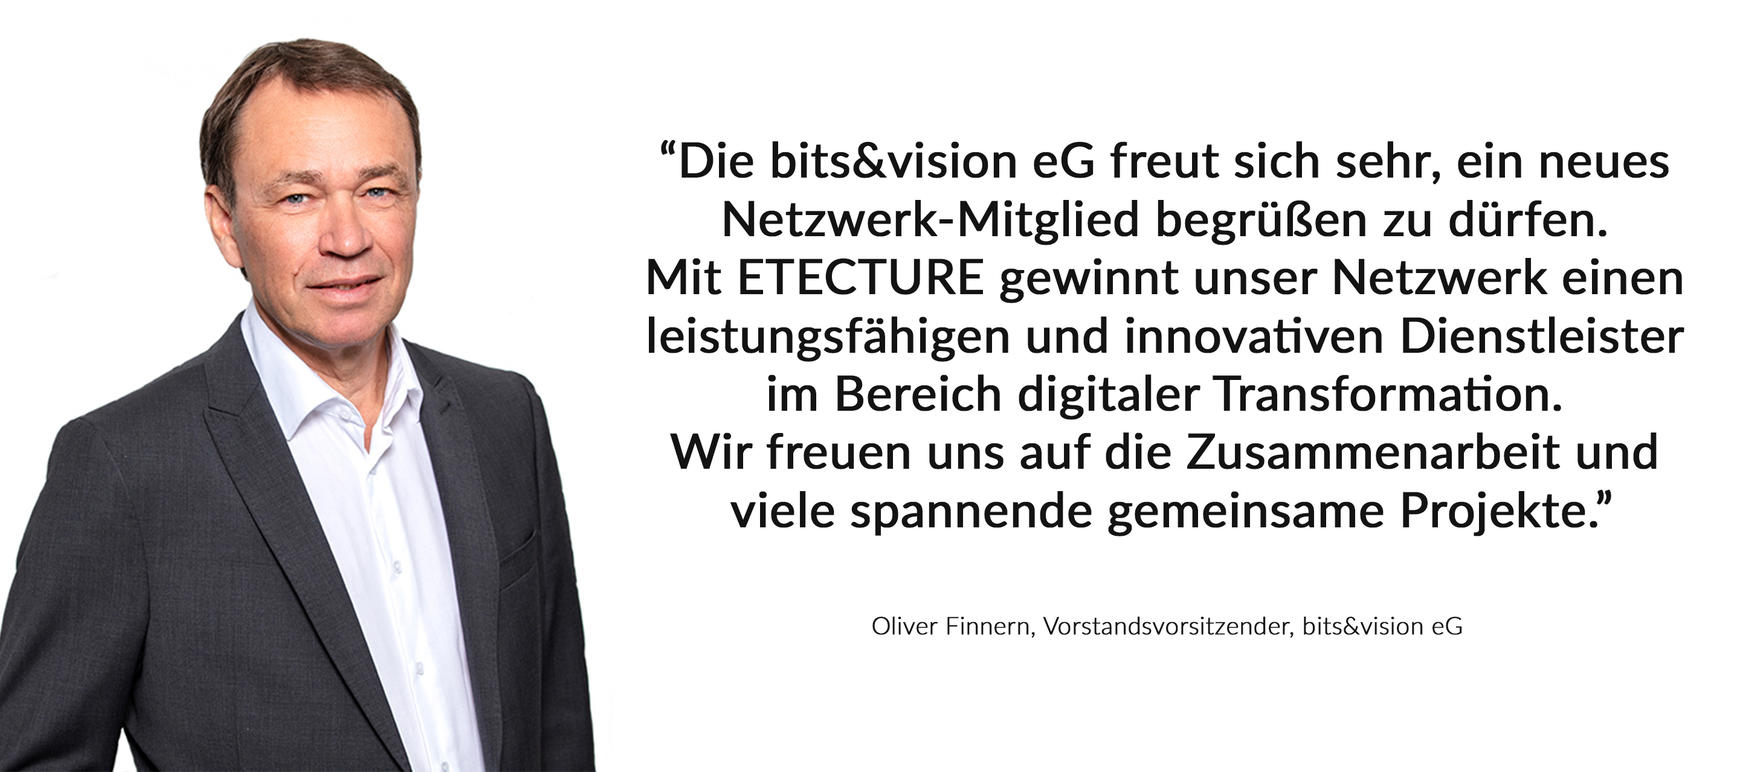 Oliver Finnern, Vorstandsvorsitzender, bits&vision eG